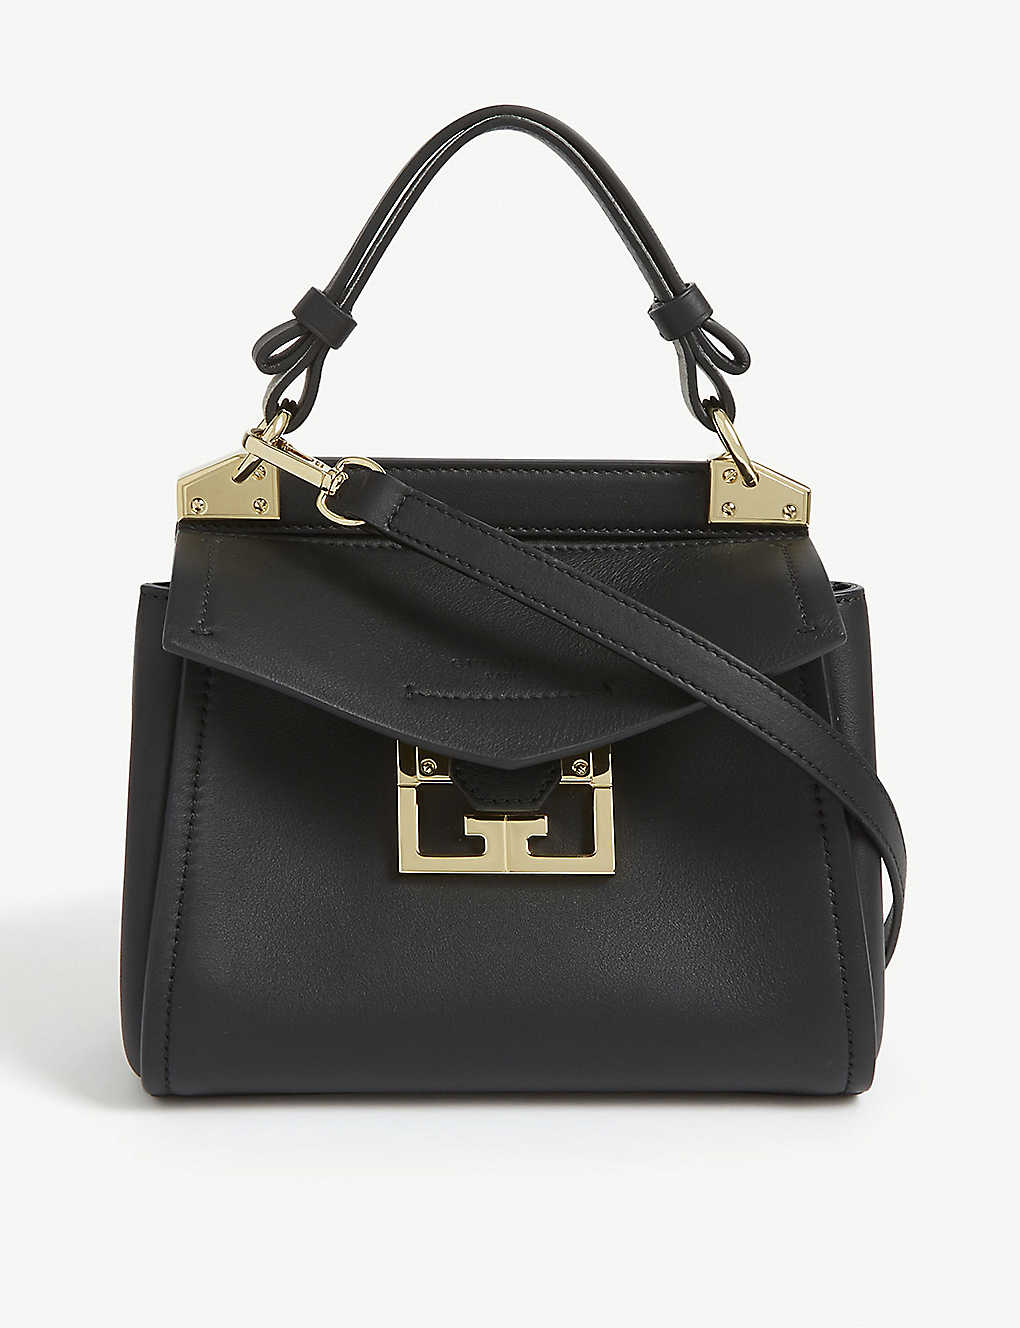 GIVENCHY - Mystic mini leather top handle bag | Selfridges.com